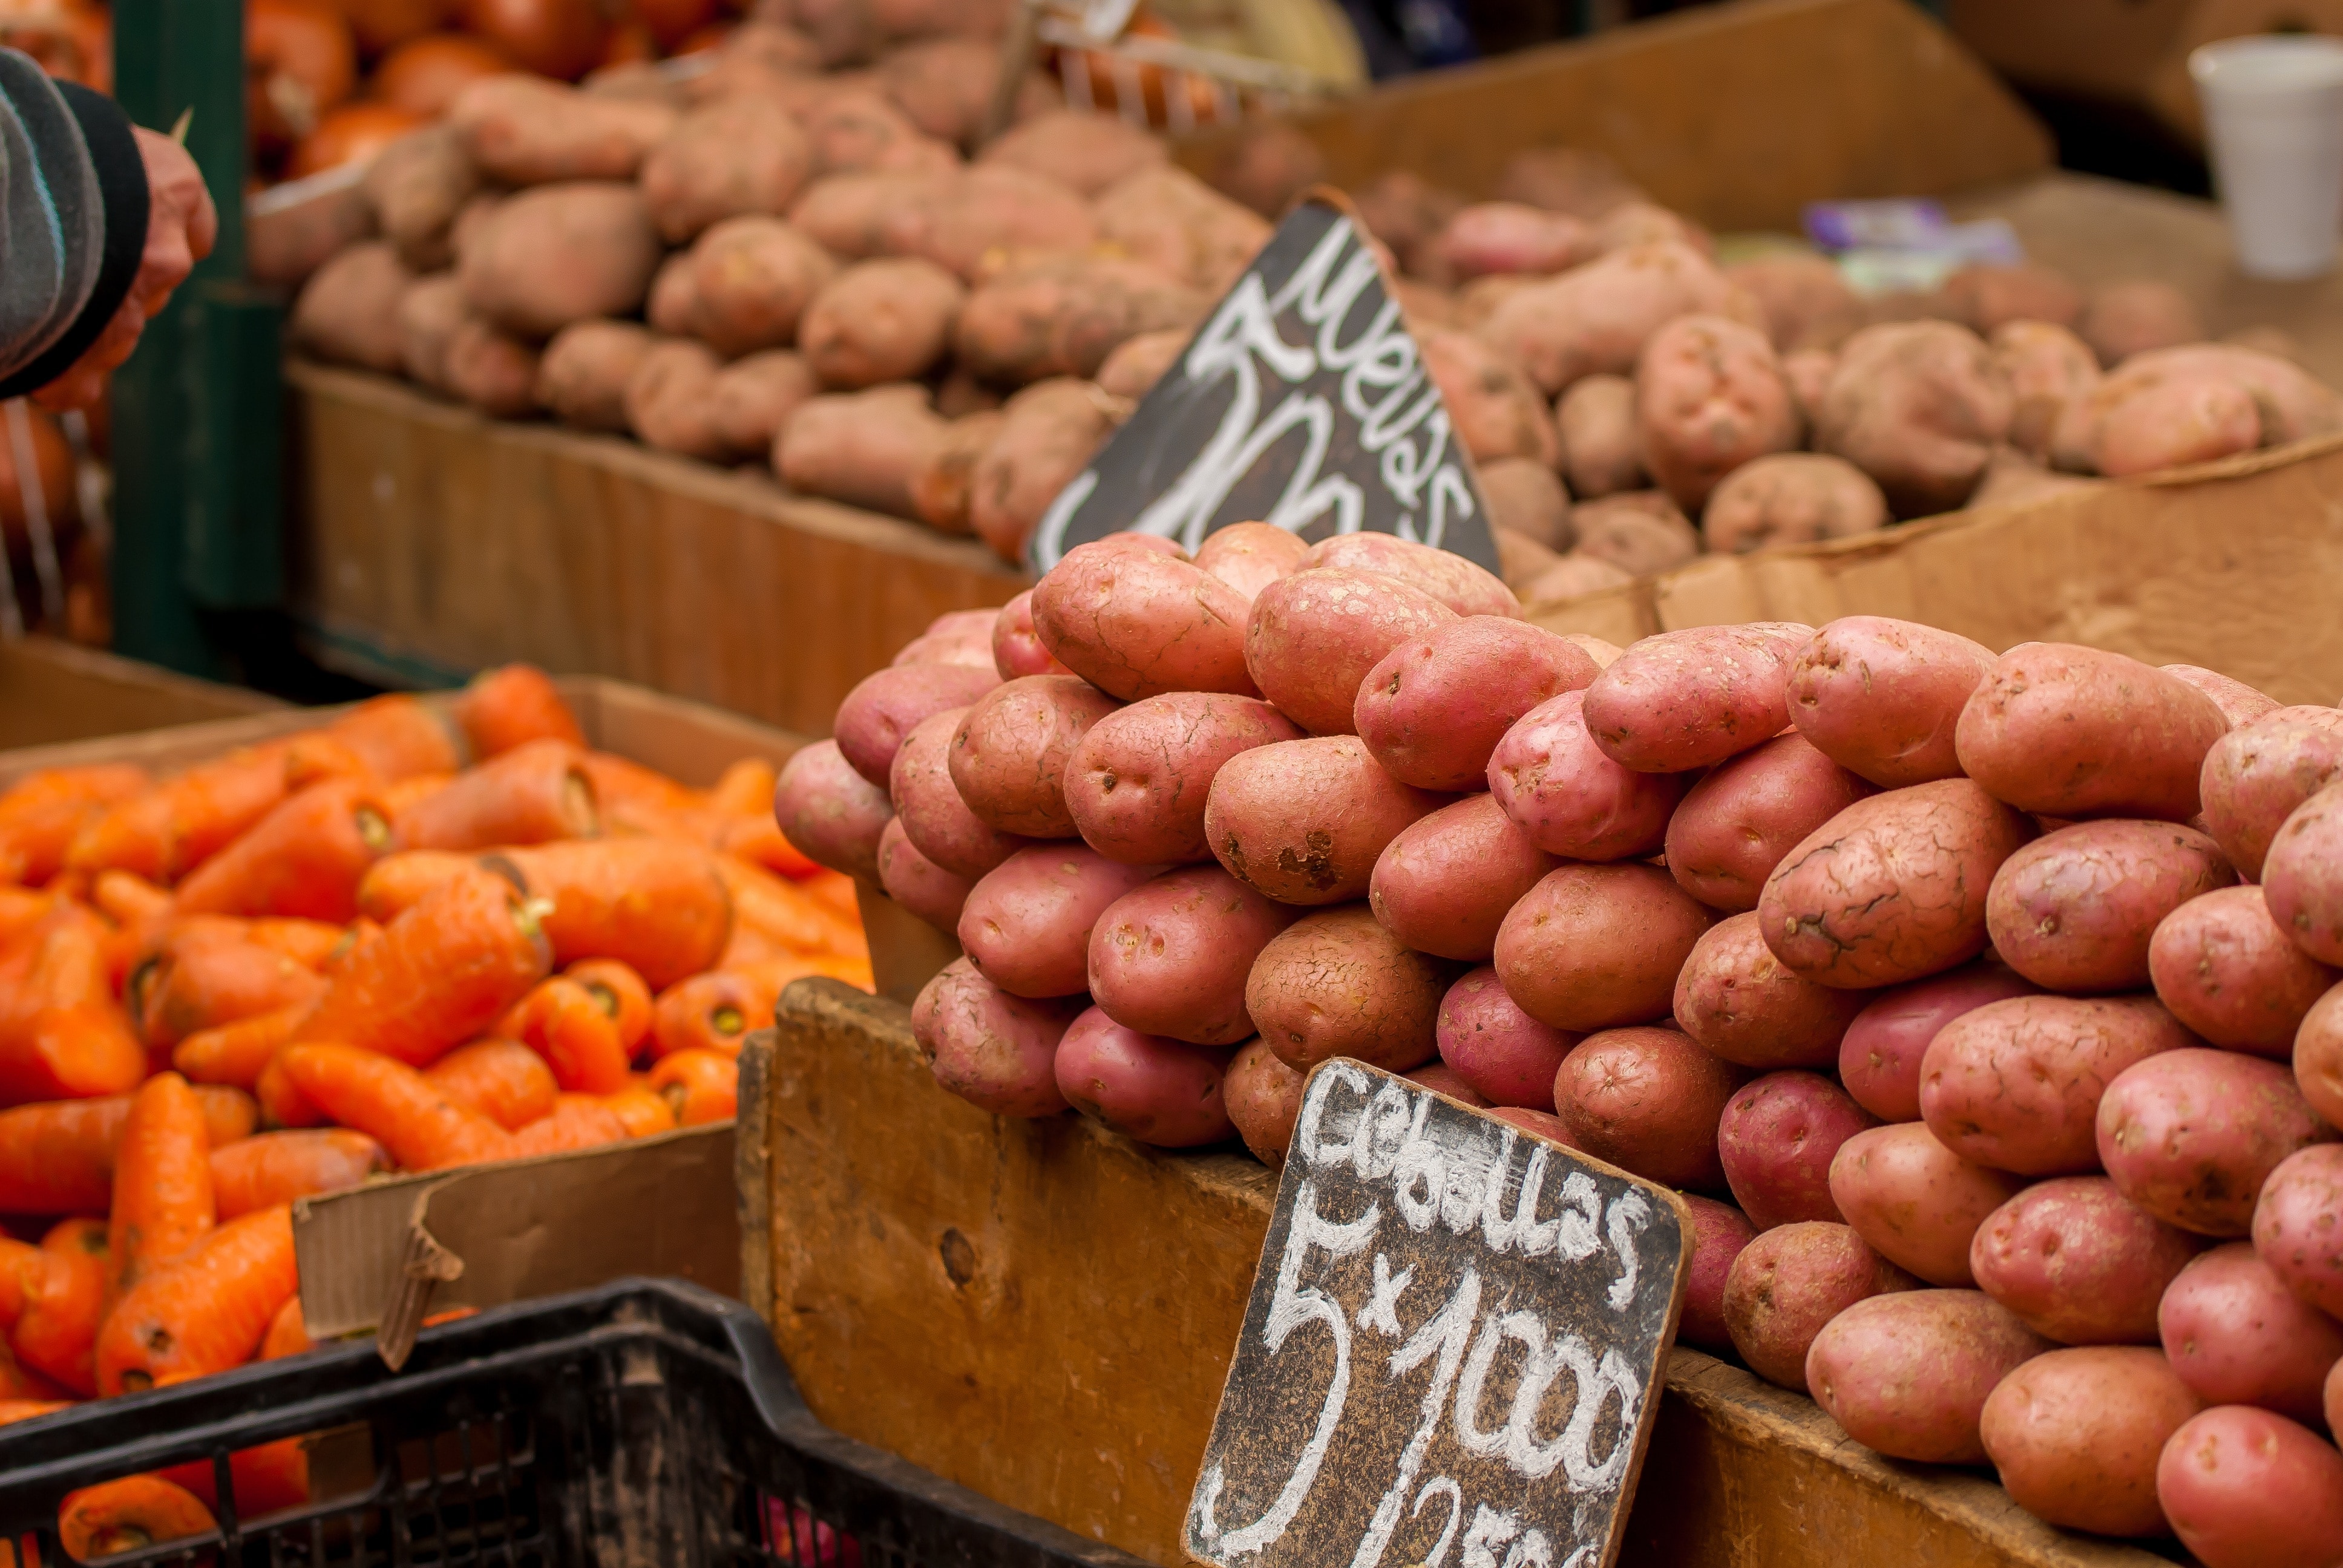 Fruit, Vegetables, Carrots, Potatos, food and drink, market